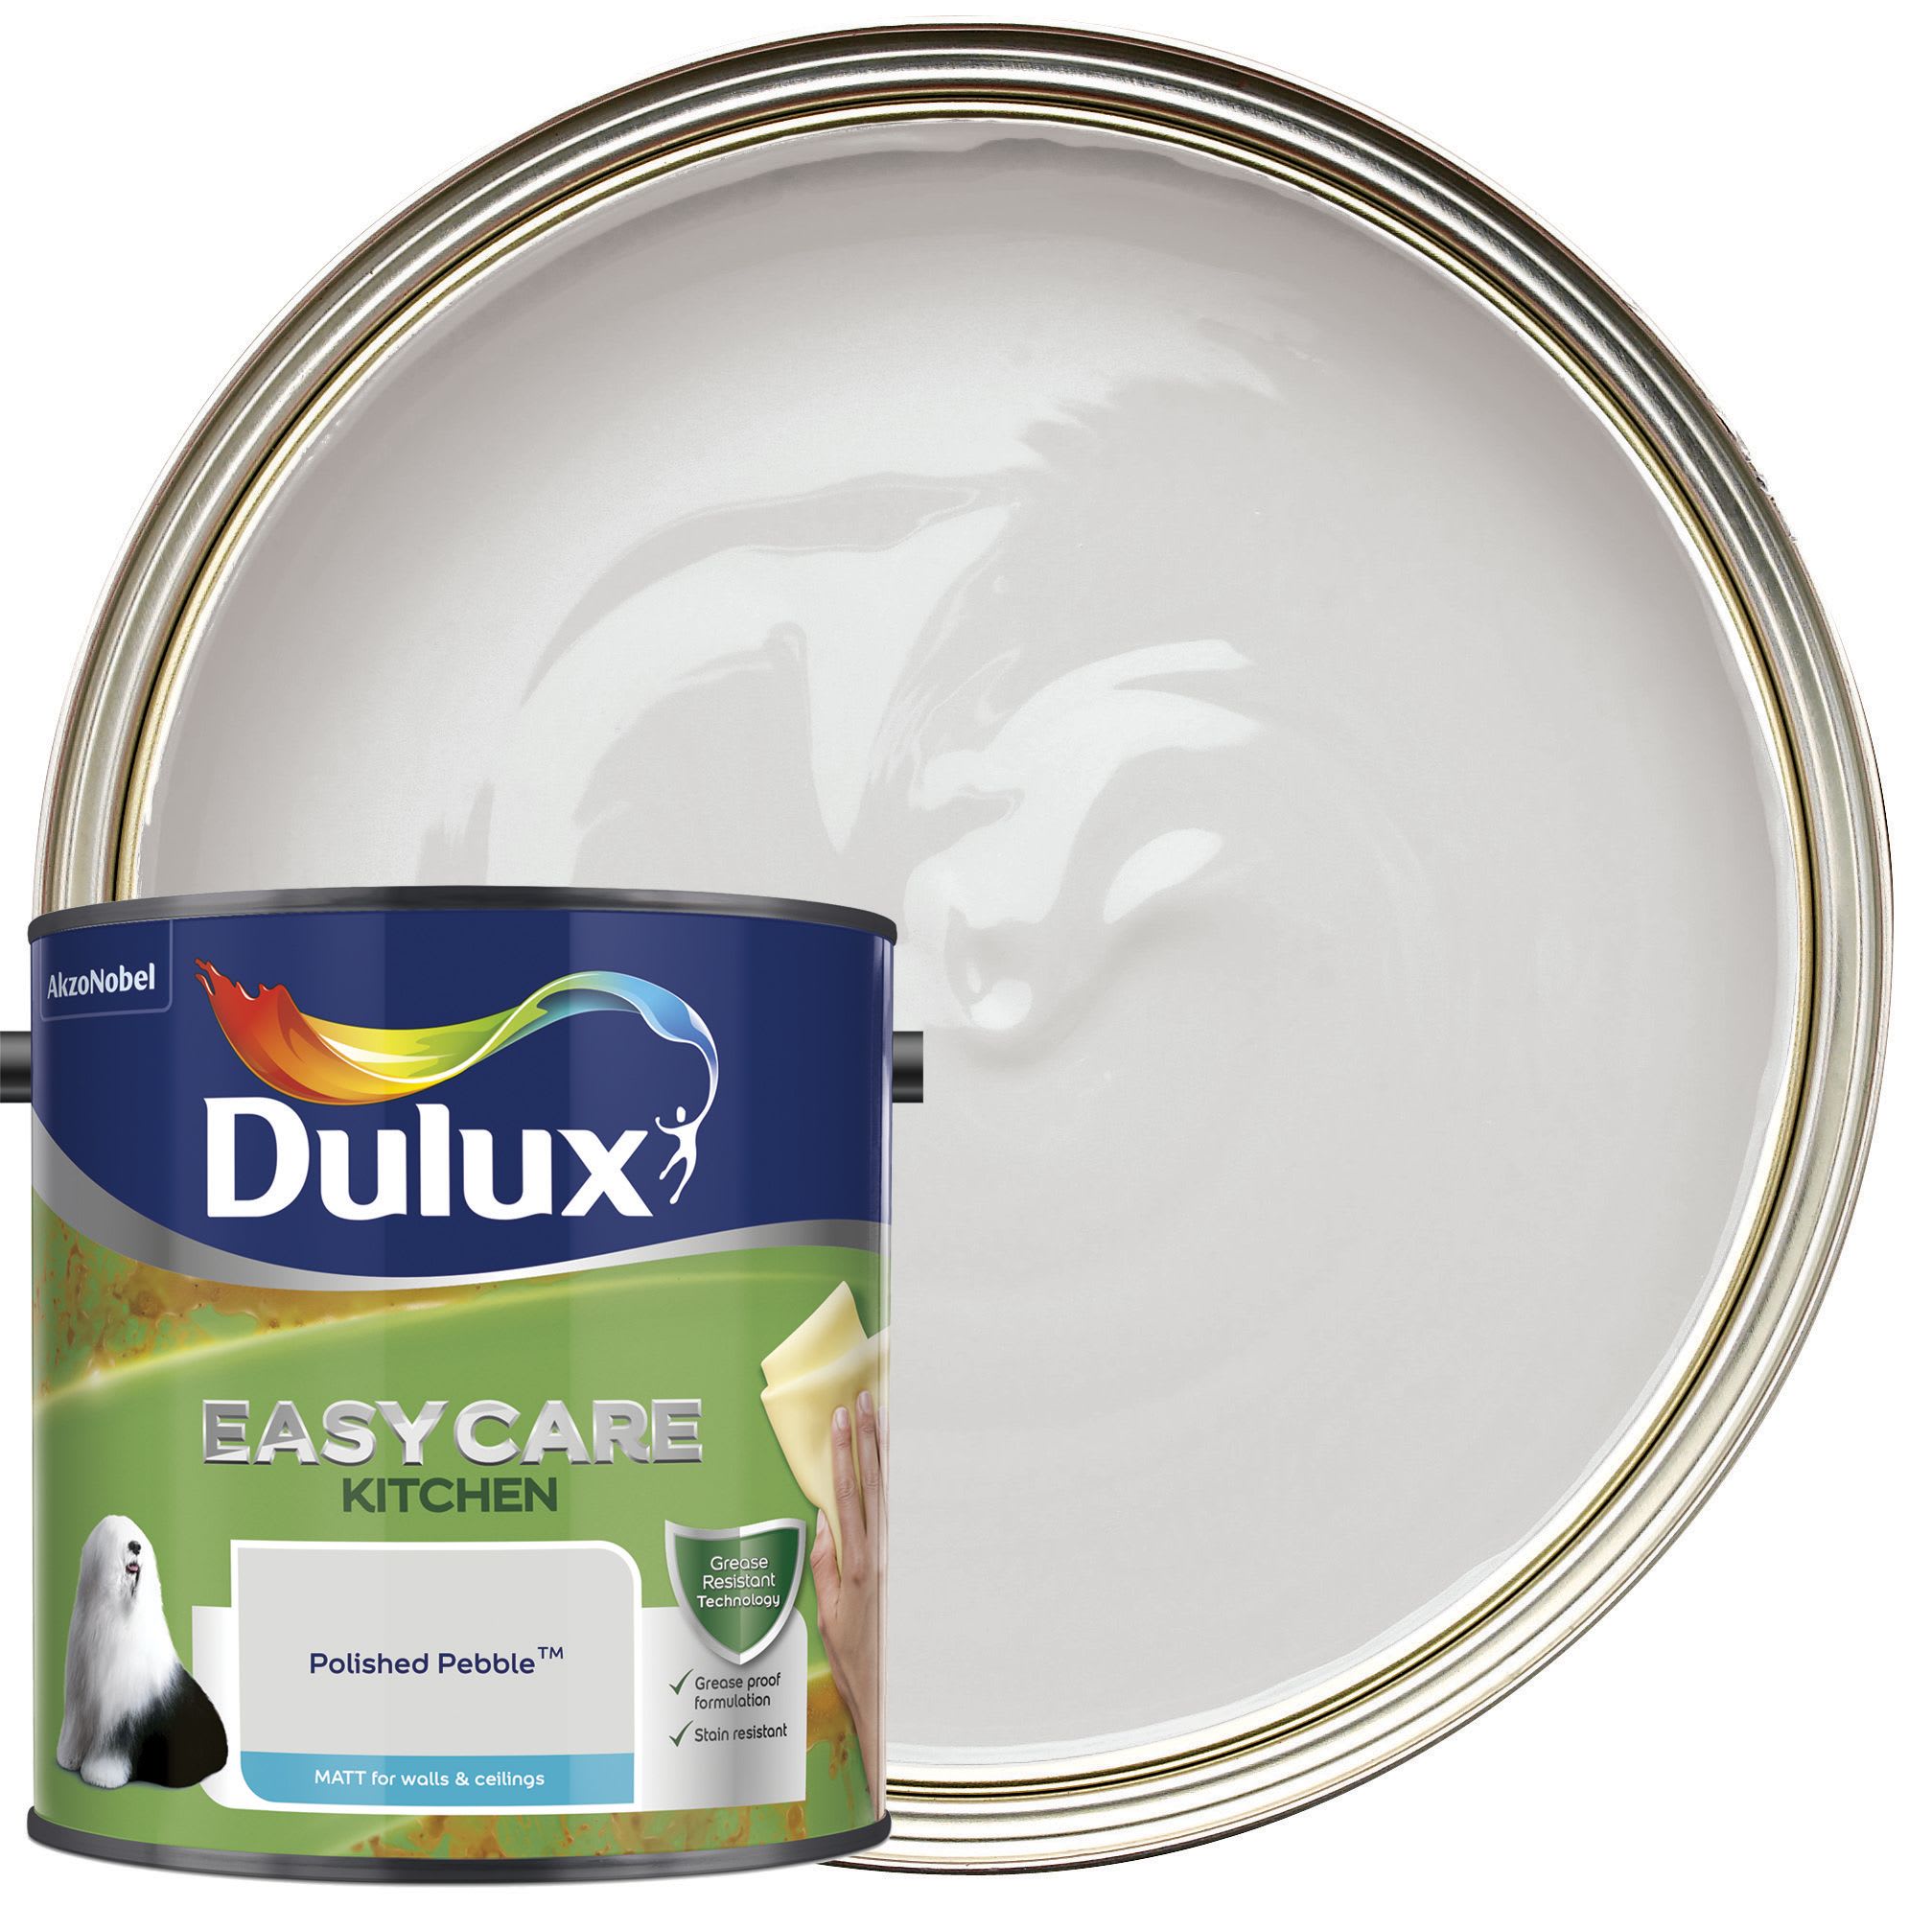 Dulux Easycare Kitchen Matt Emulsion Paint - Polished